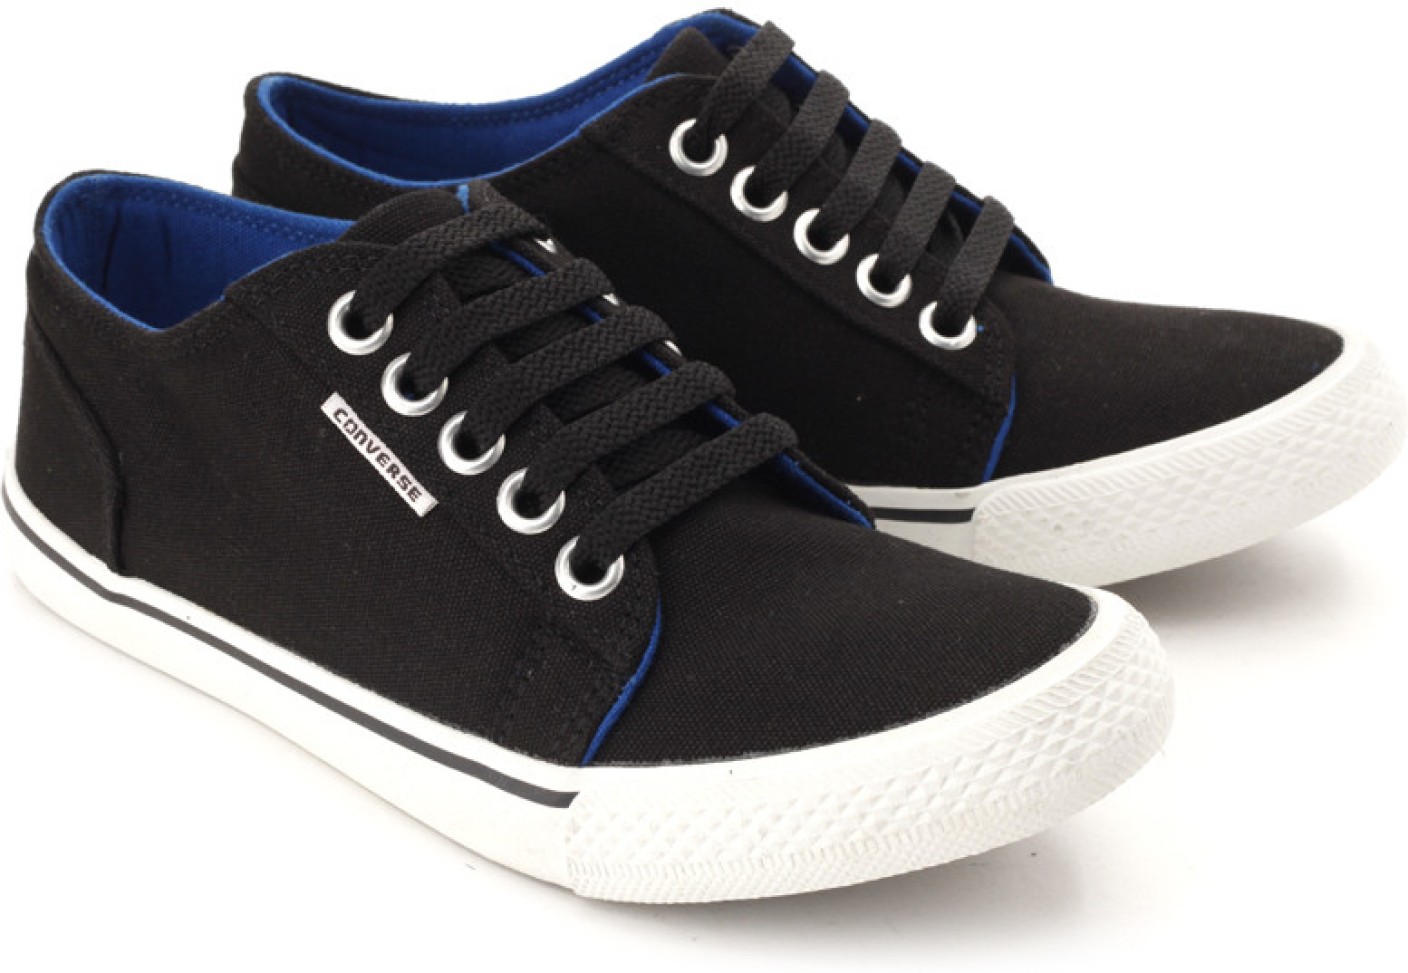 Converse Sneakers For Men - Buy Black Color Converse Sneakers For Men ...